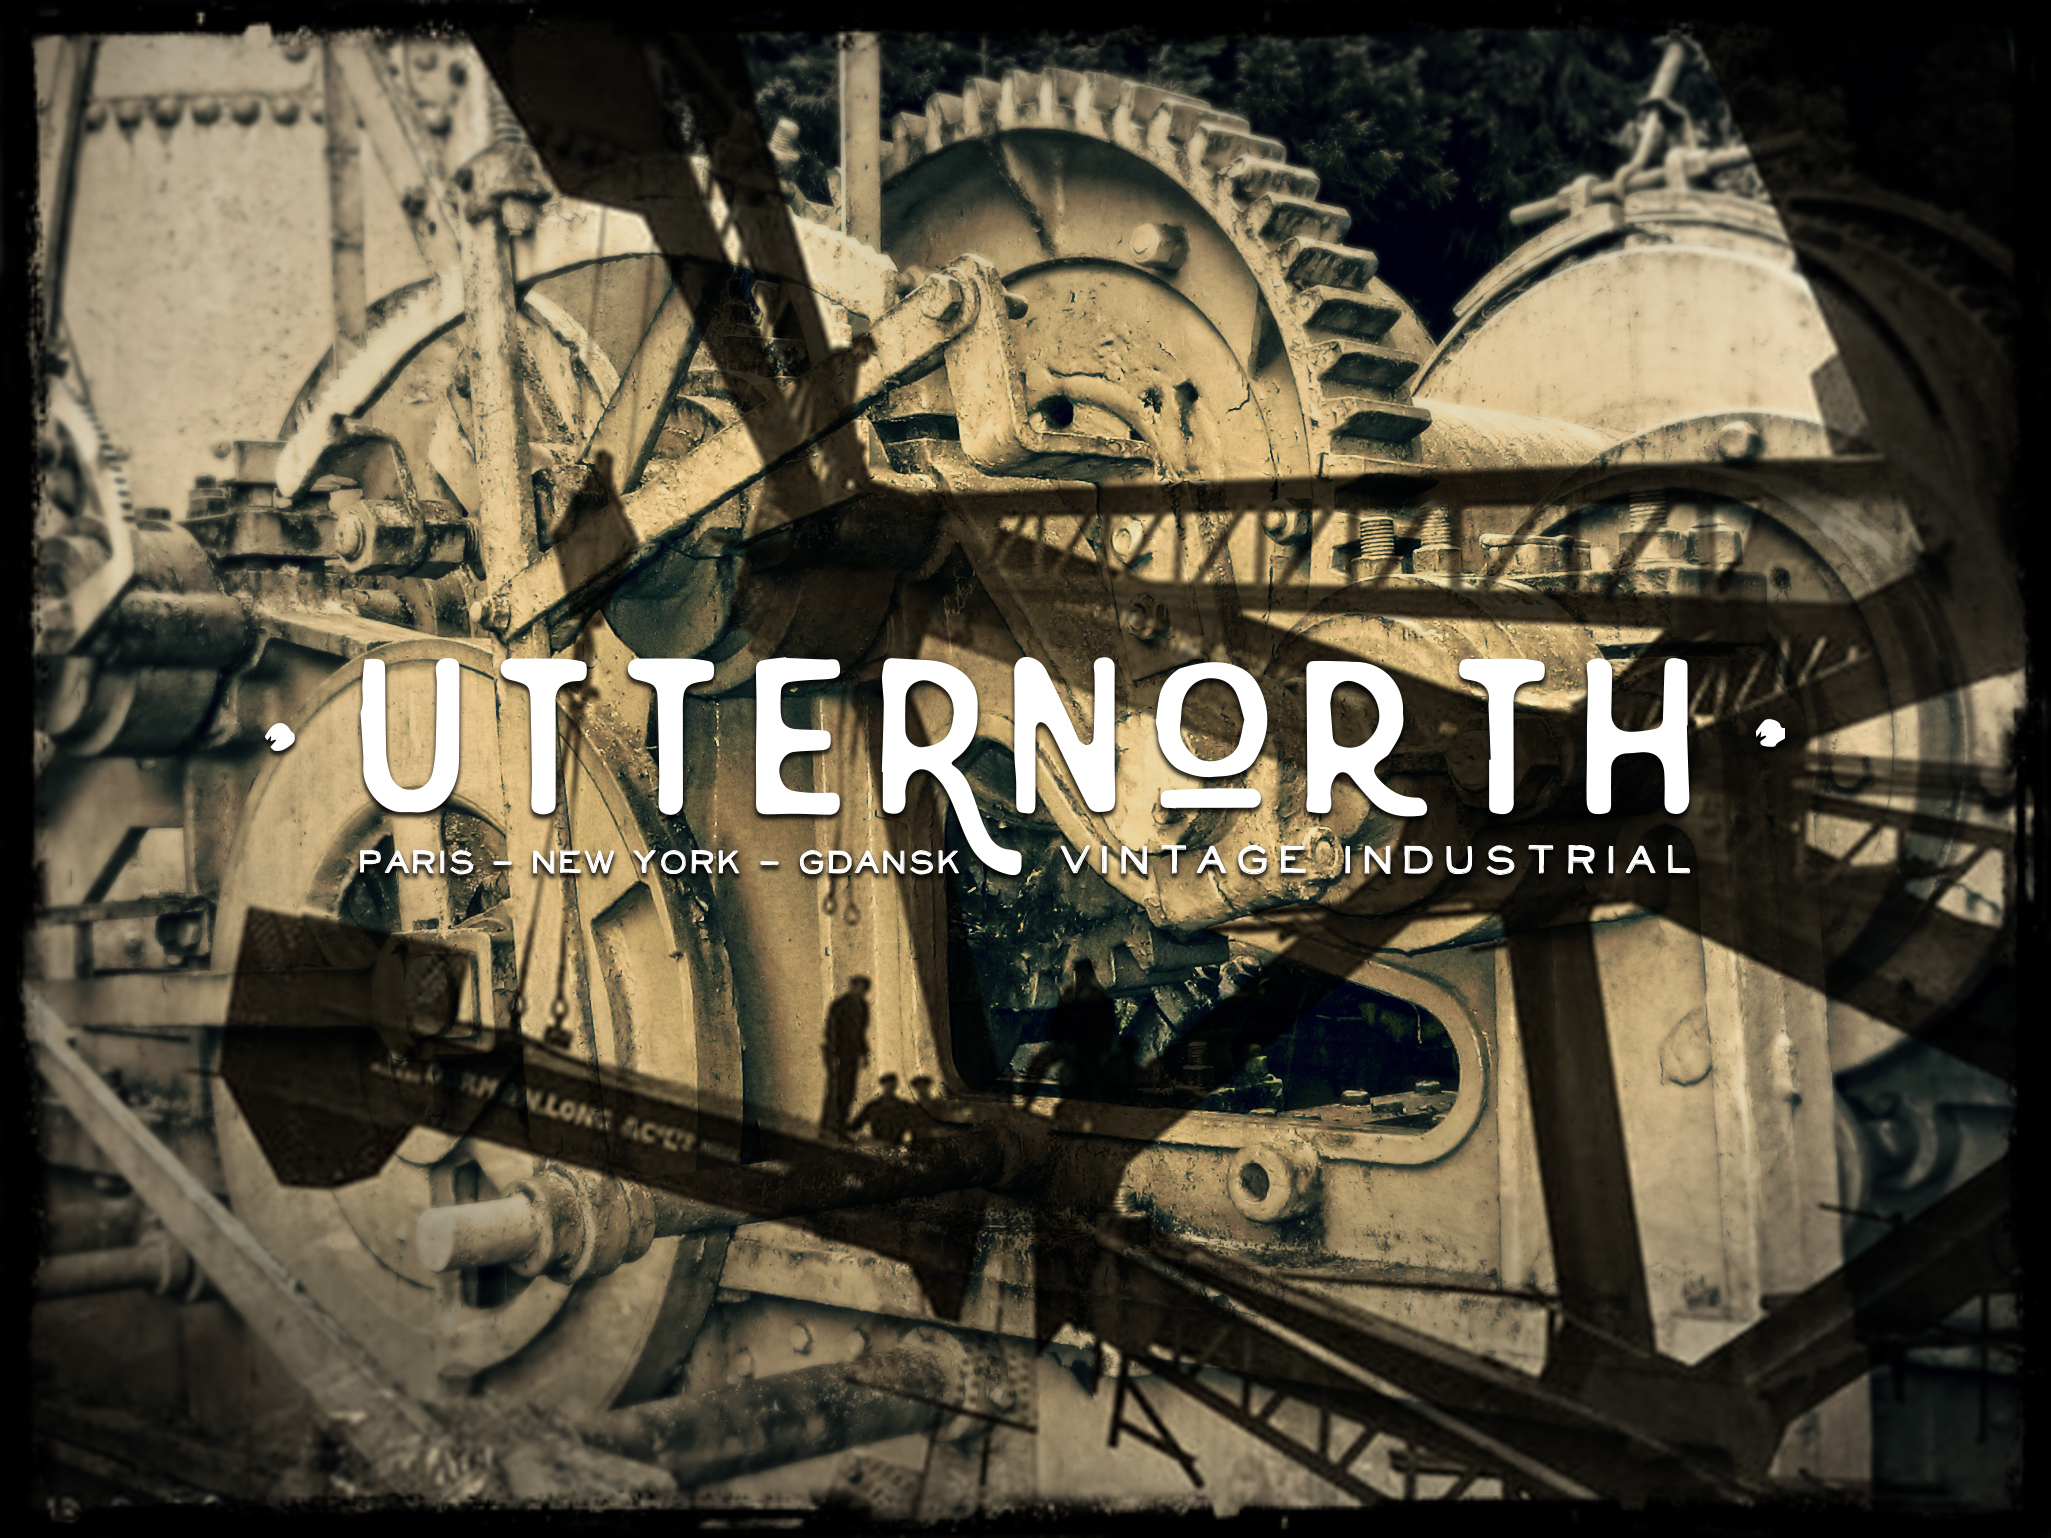 Utternorth-bridge-newyork2